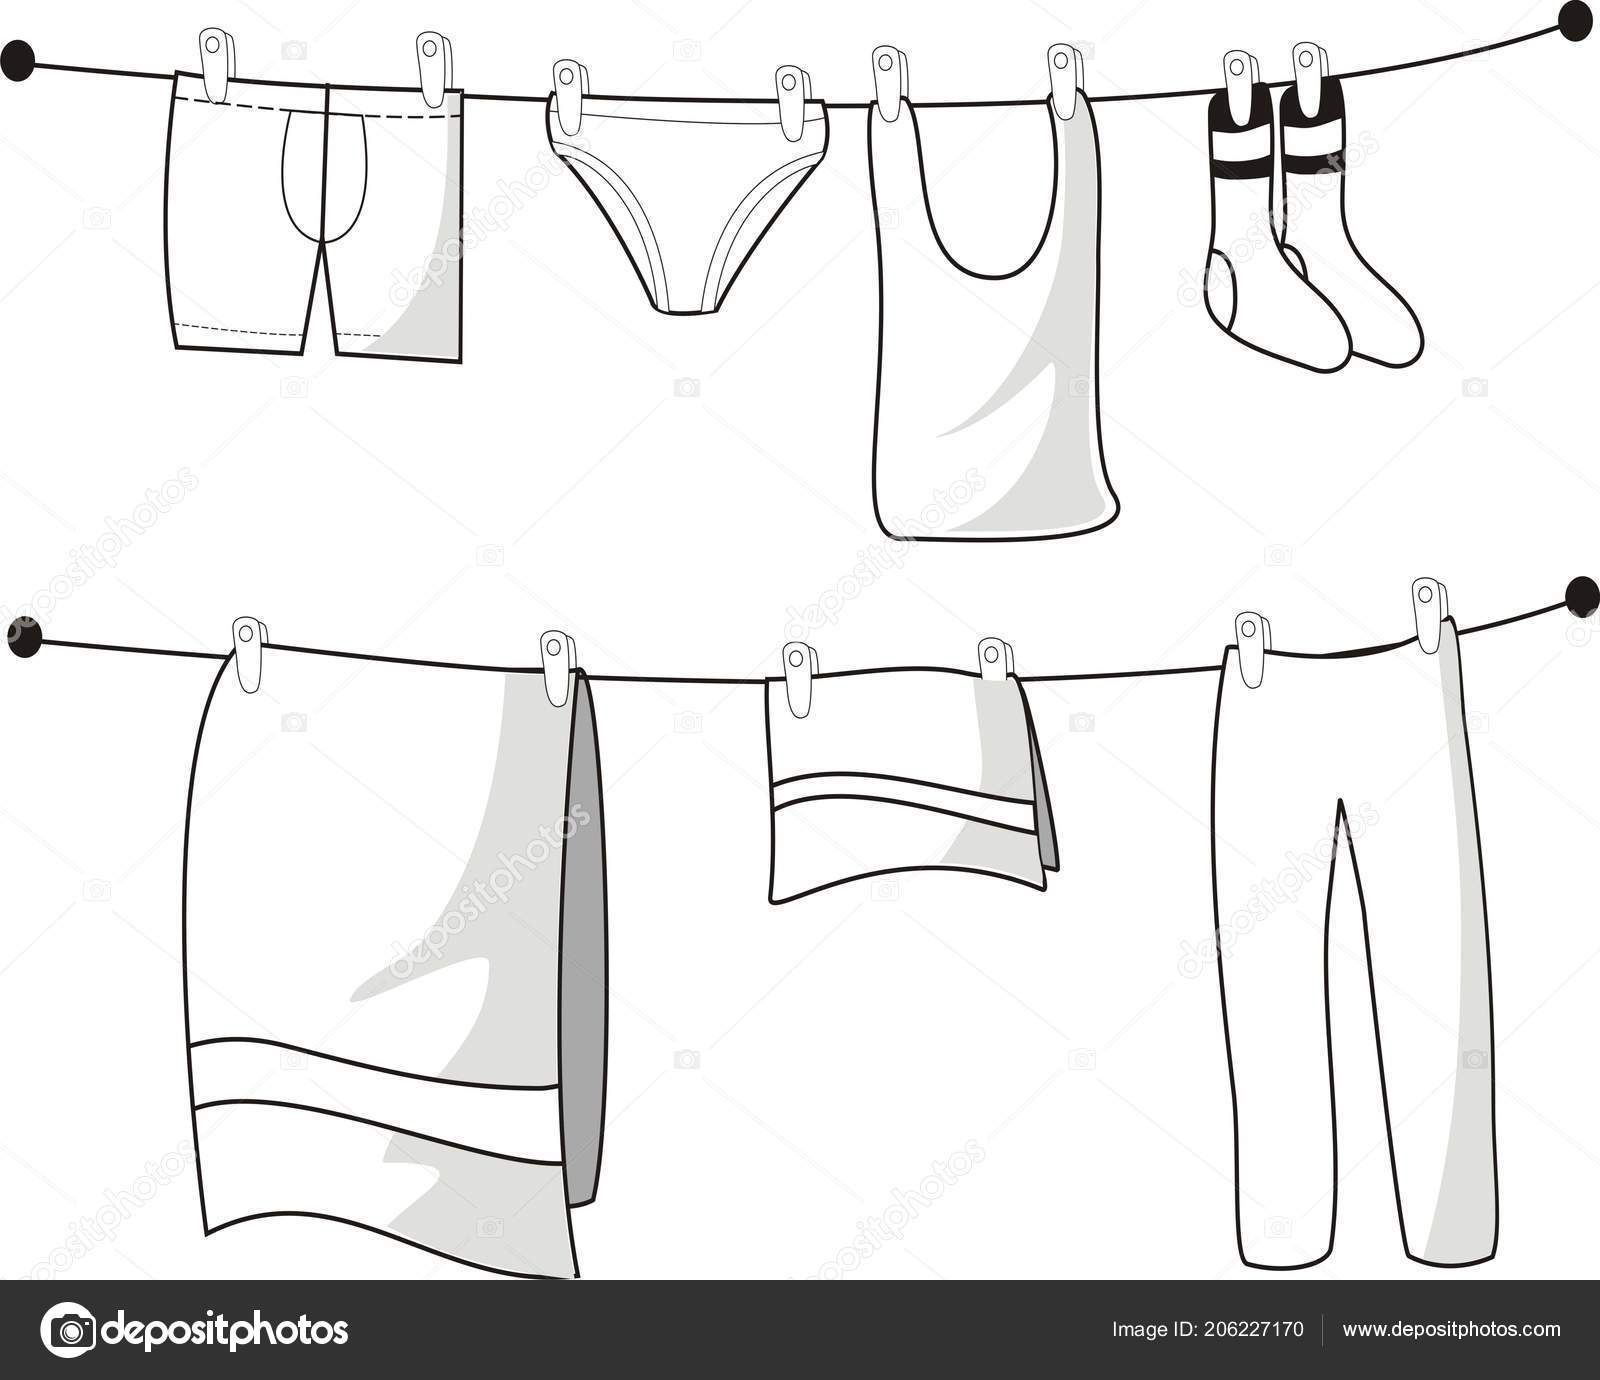 https://st4.depositphotos.com/18534188/20622/v/1600/depositphotos_206227170-stock-illustration-clothes-hanging-clothesline-hand-drawn.jpg